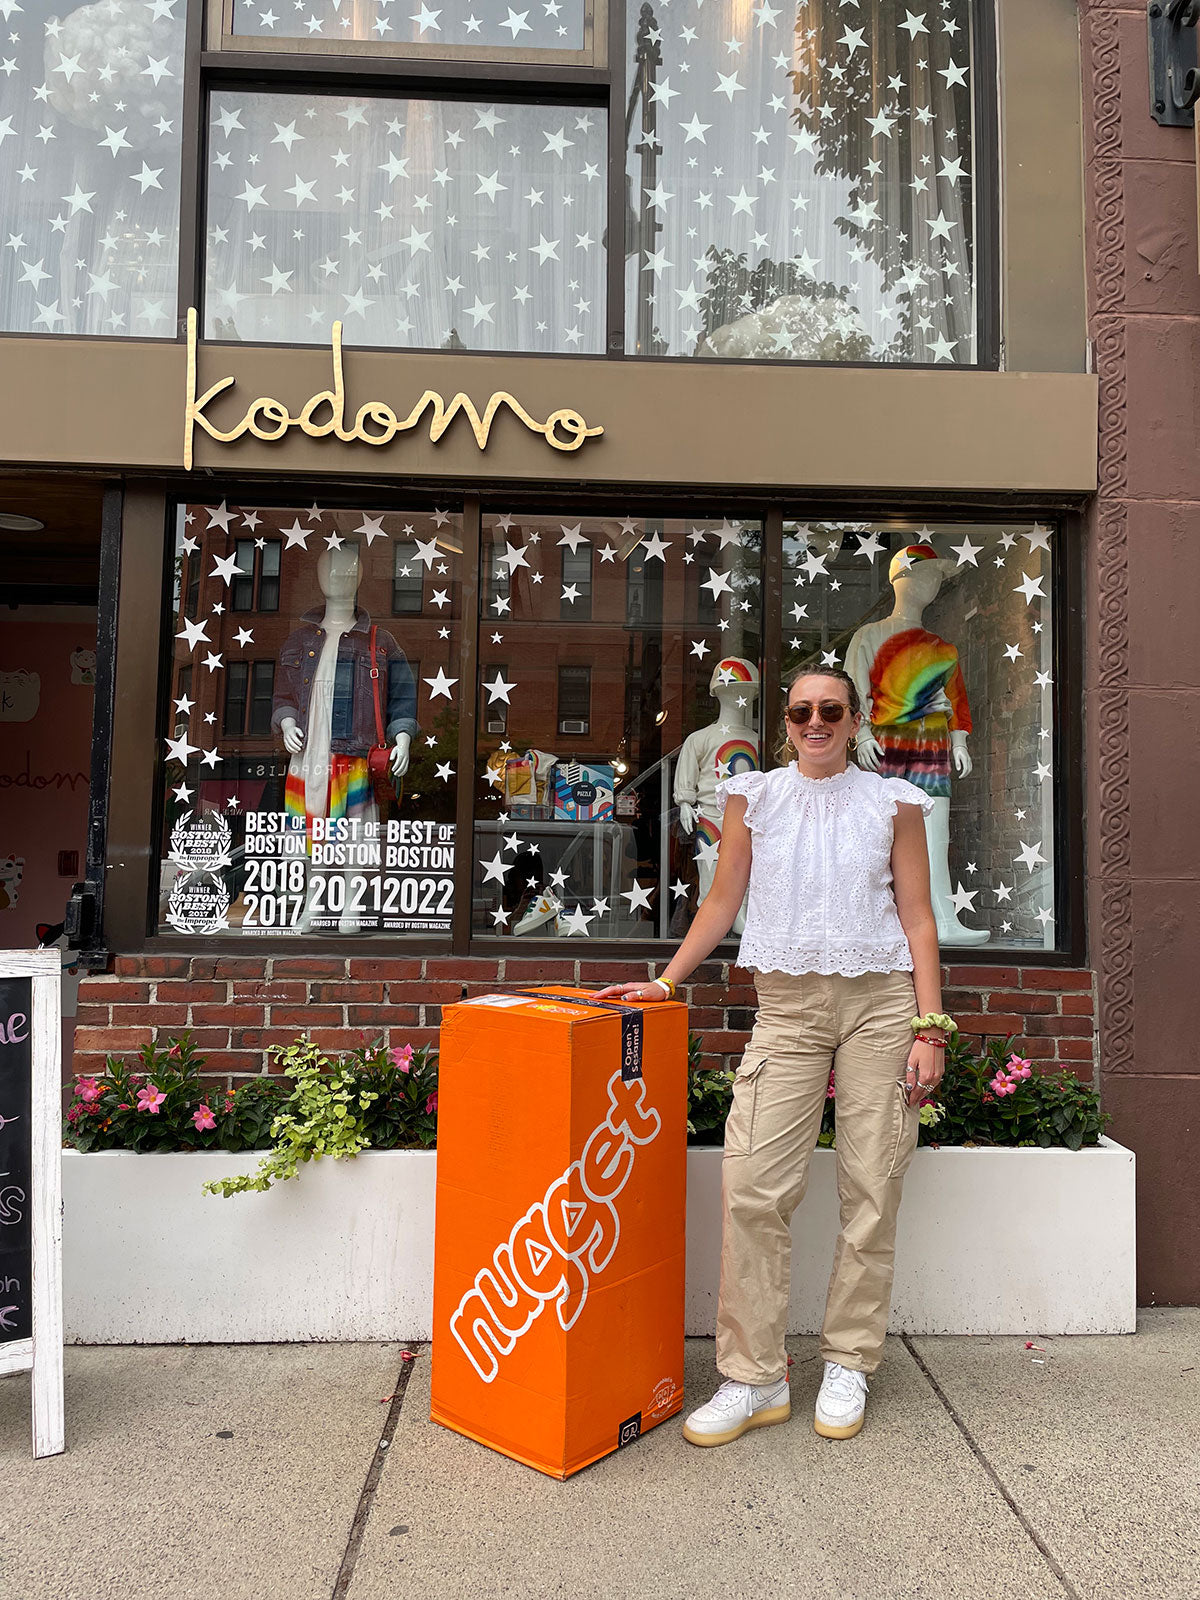 Owner of Kodomo outside her storefront